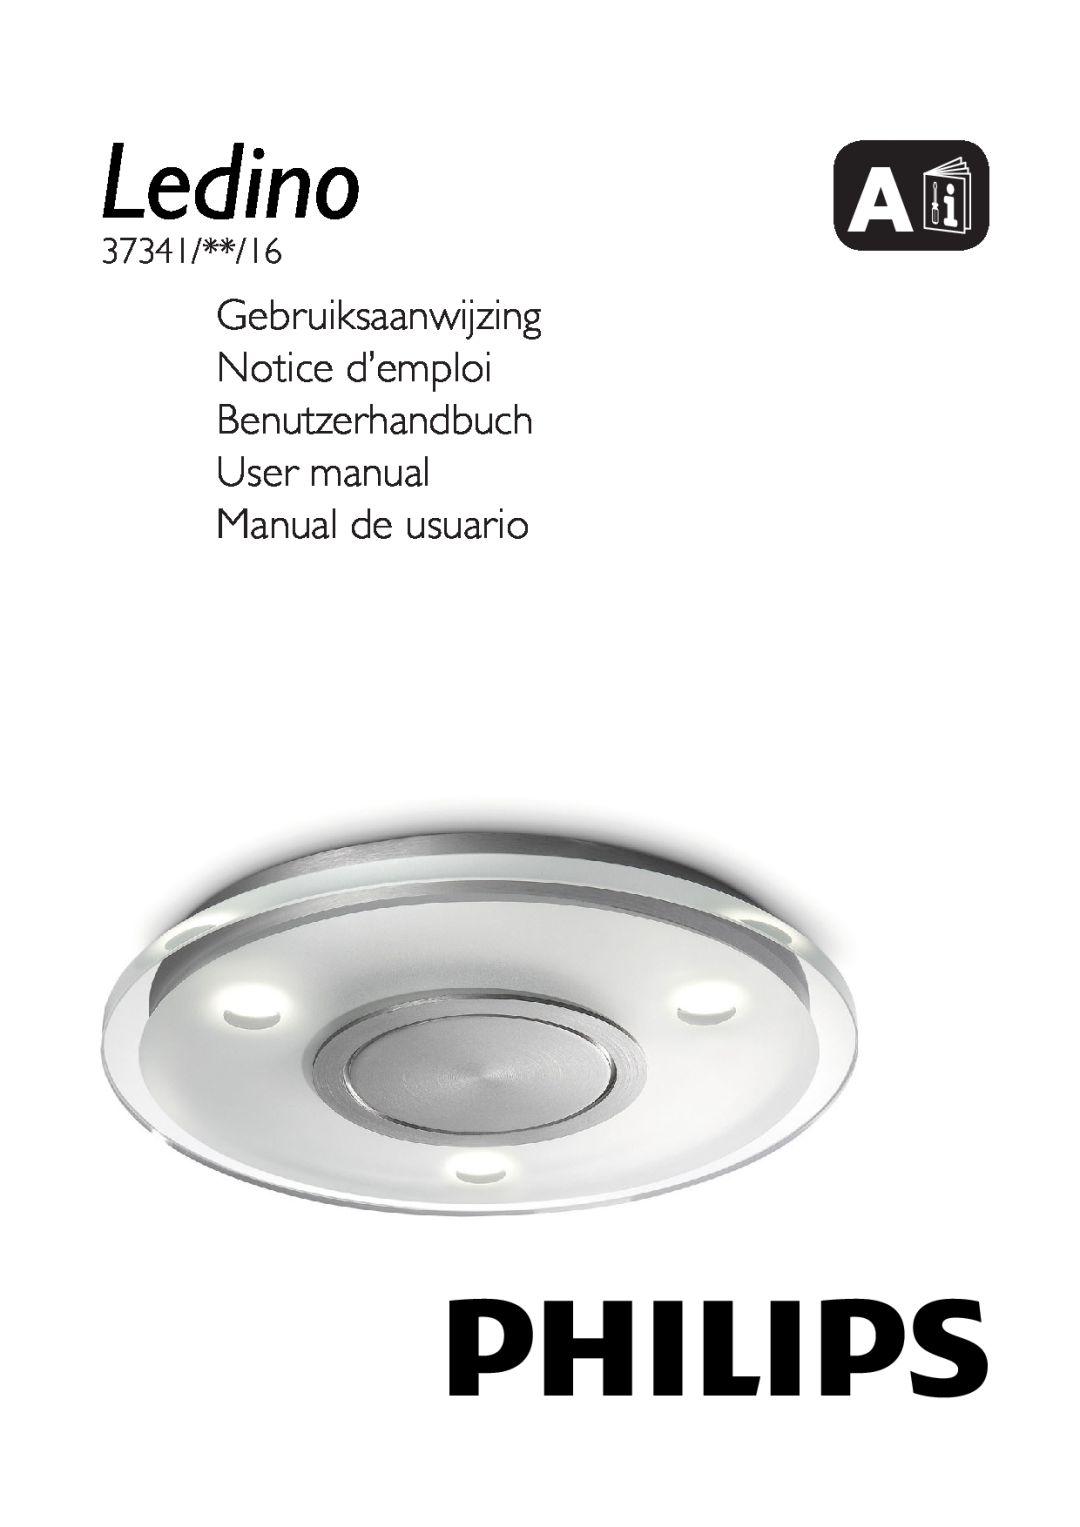 Philips 37341/48/16 user manual Gebruiksaanwijzing Notice d’emploi, Benutzerhandbuch User manual Manual de usuario, Ledino 